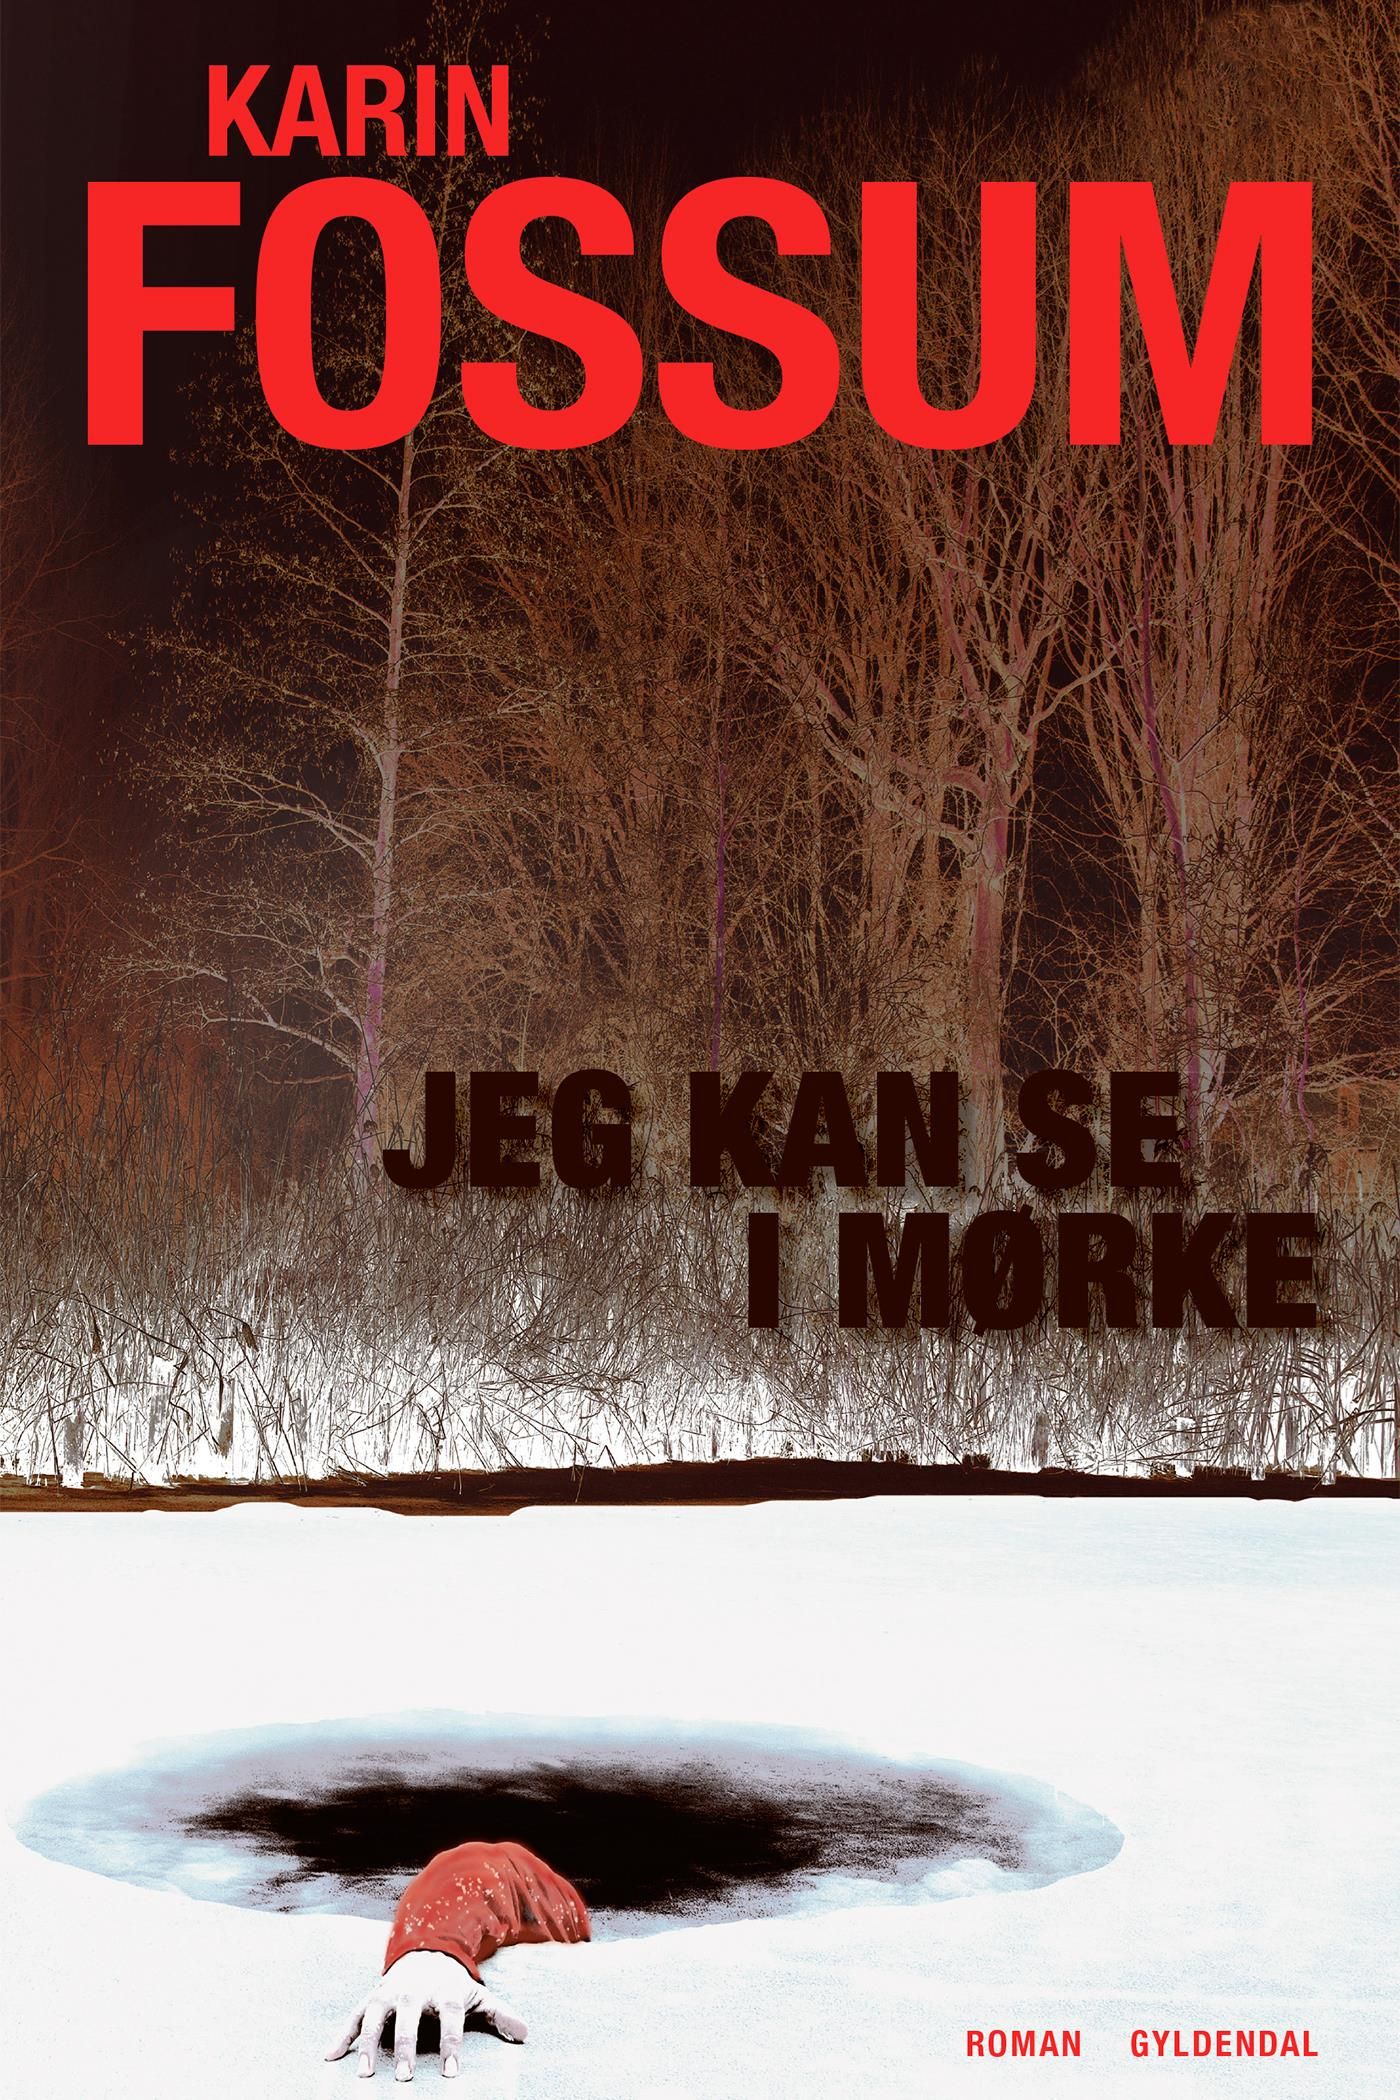 Jeg kan se i mørke, eBook by Karin Fossum